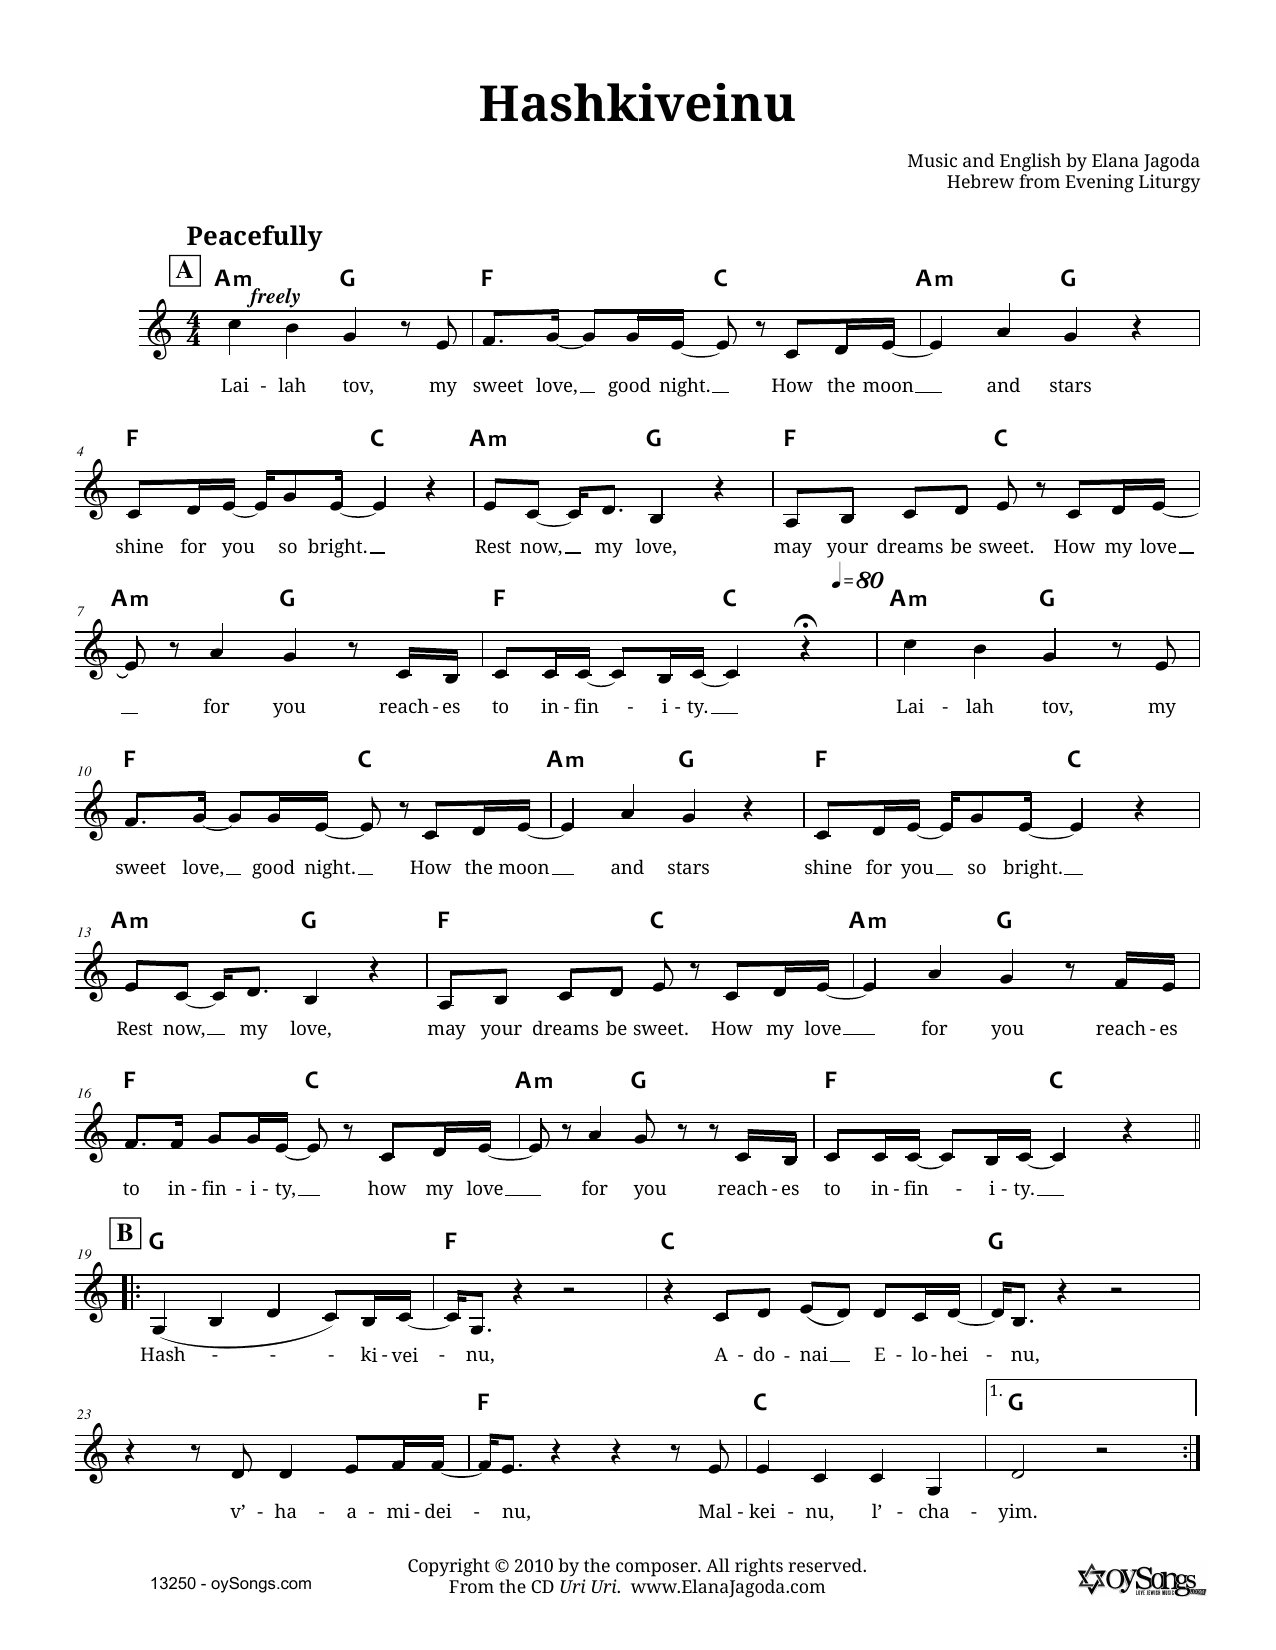 Download Elana Jagoda Hashkiveinu Sheet Music and learn how to play Melody Line, Lyrics & Chords PDF digital score in minutes